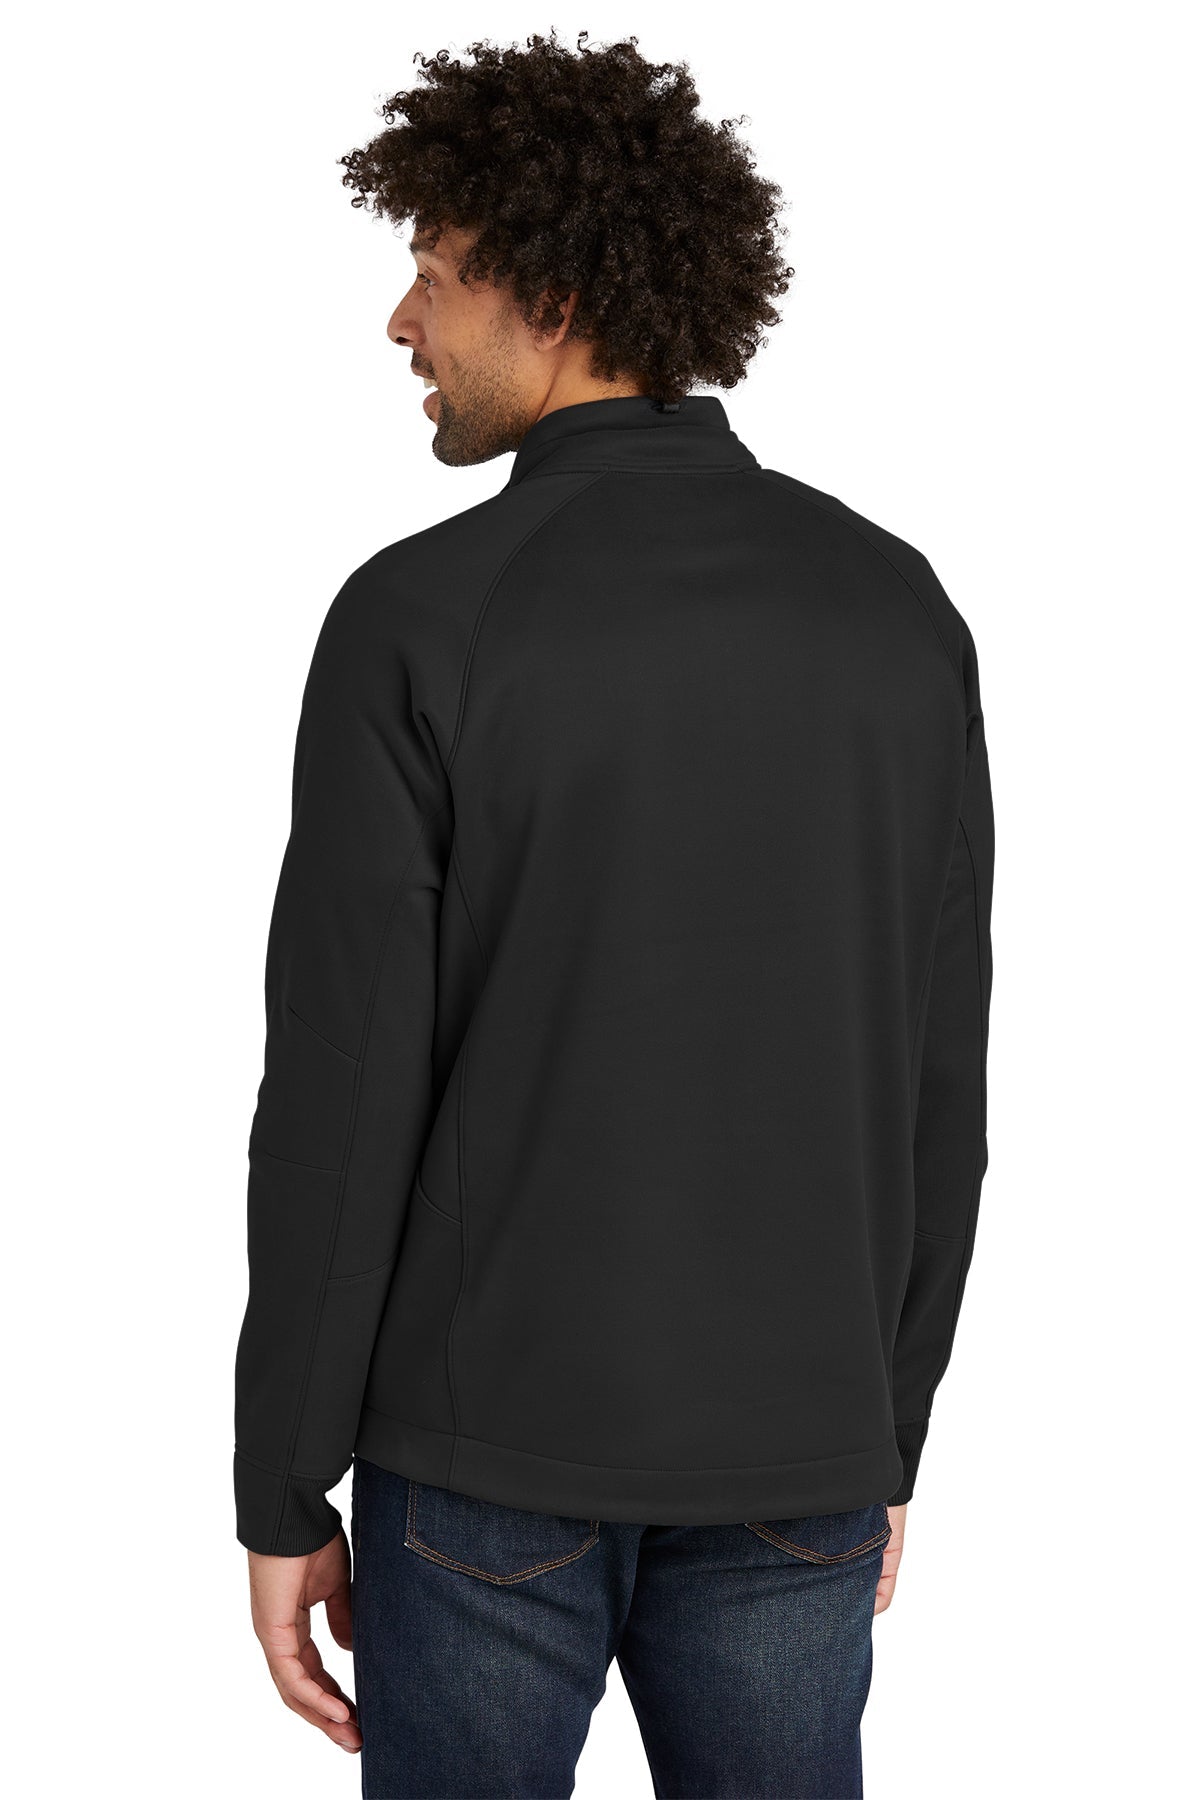 New Era Venue Fleece 1/4-Zip Pullover Black